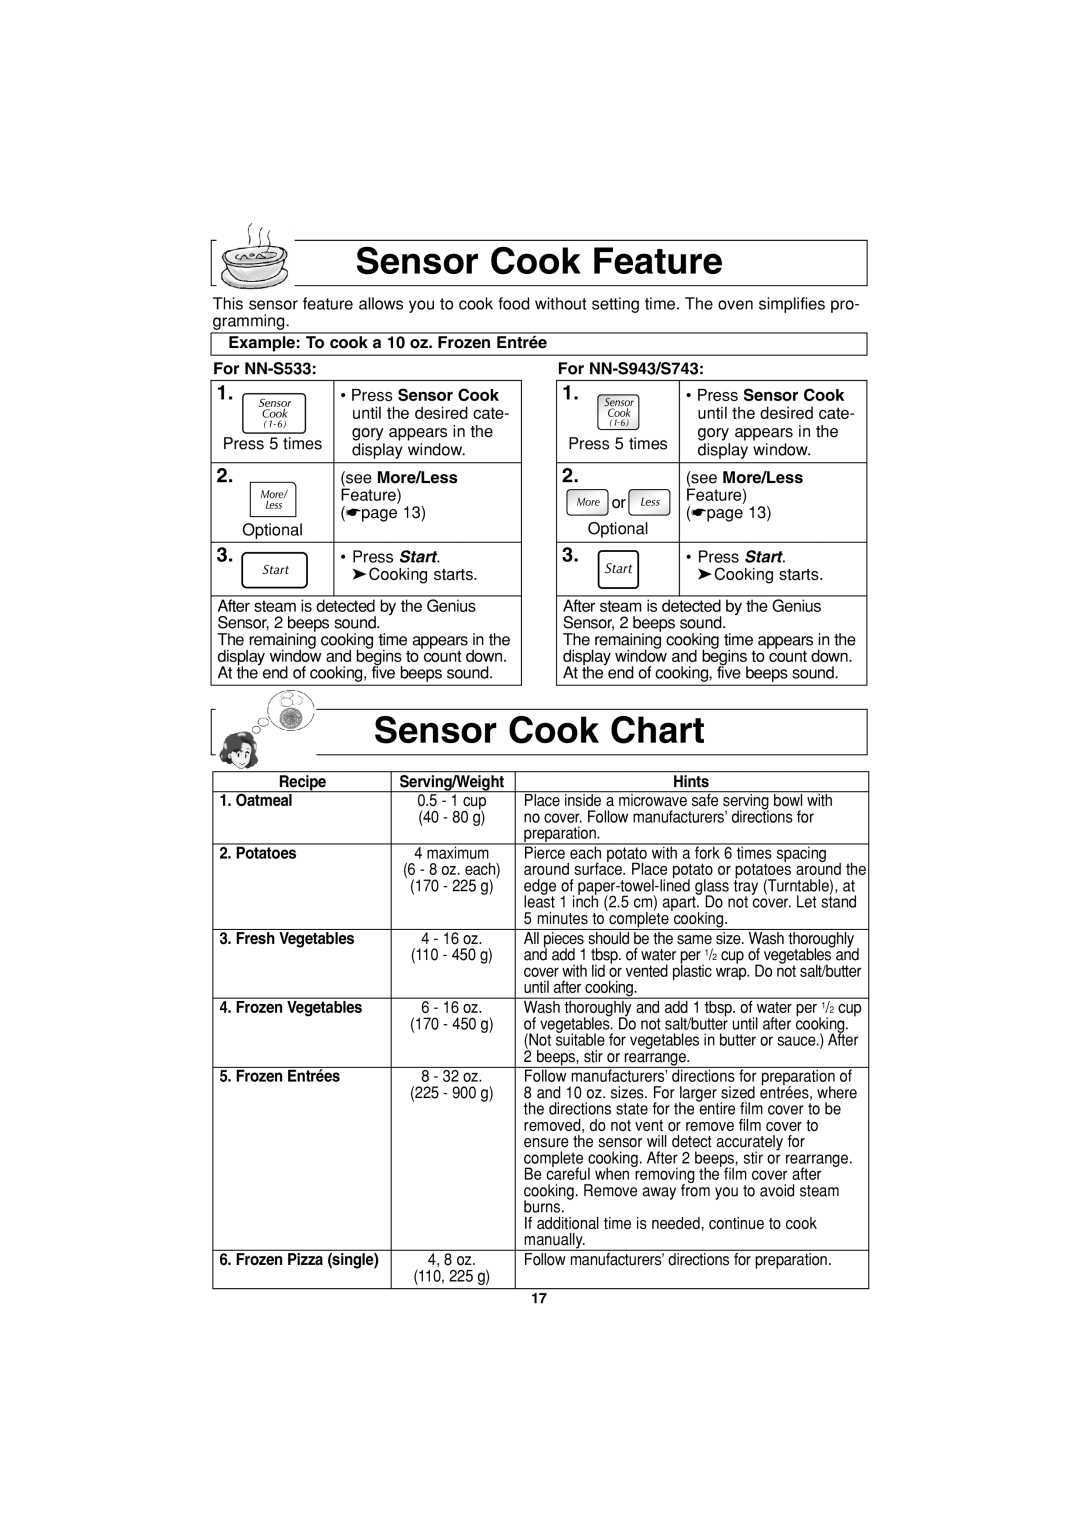 Panasonic NN-S943, NN-S743, NN-S533 important safety instructions Sensor Cook Feature, Sensor Cook Chart 